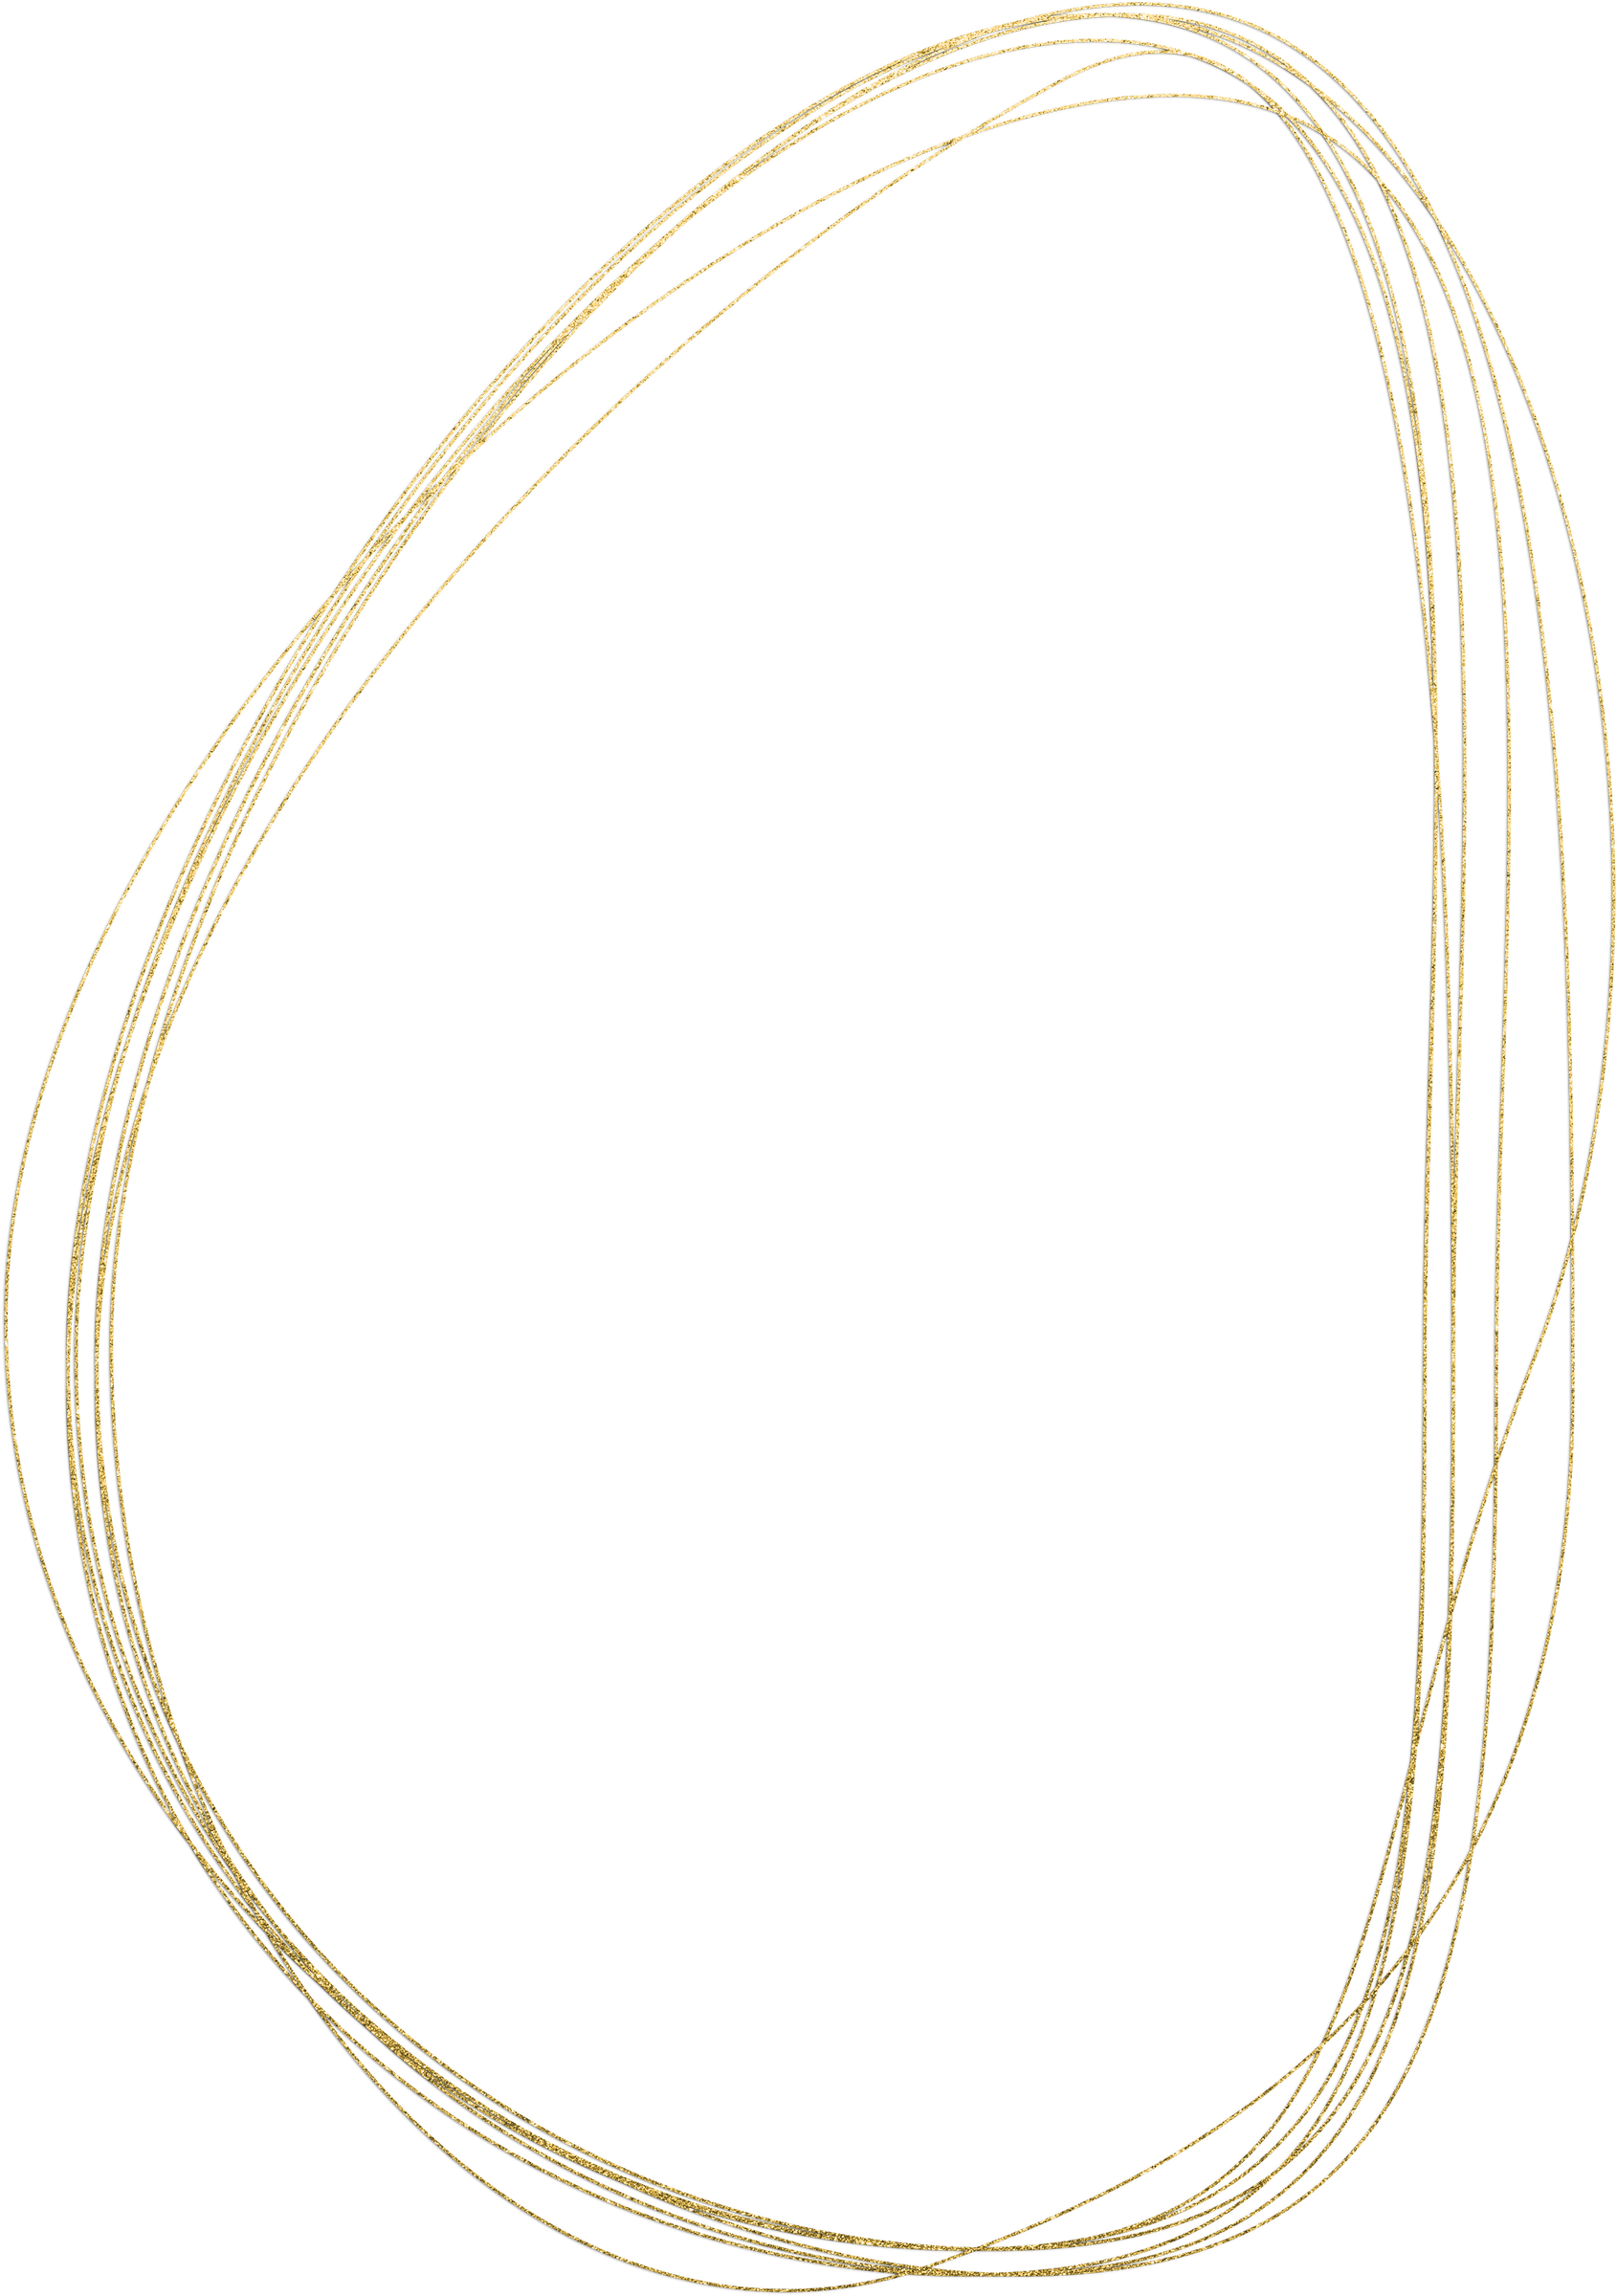 Gold wreath, frame